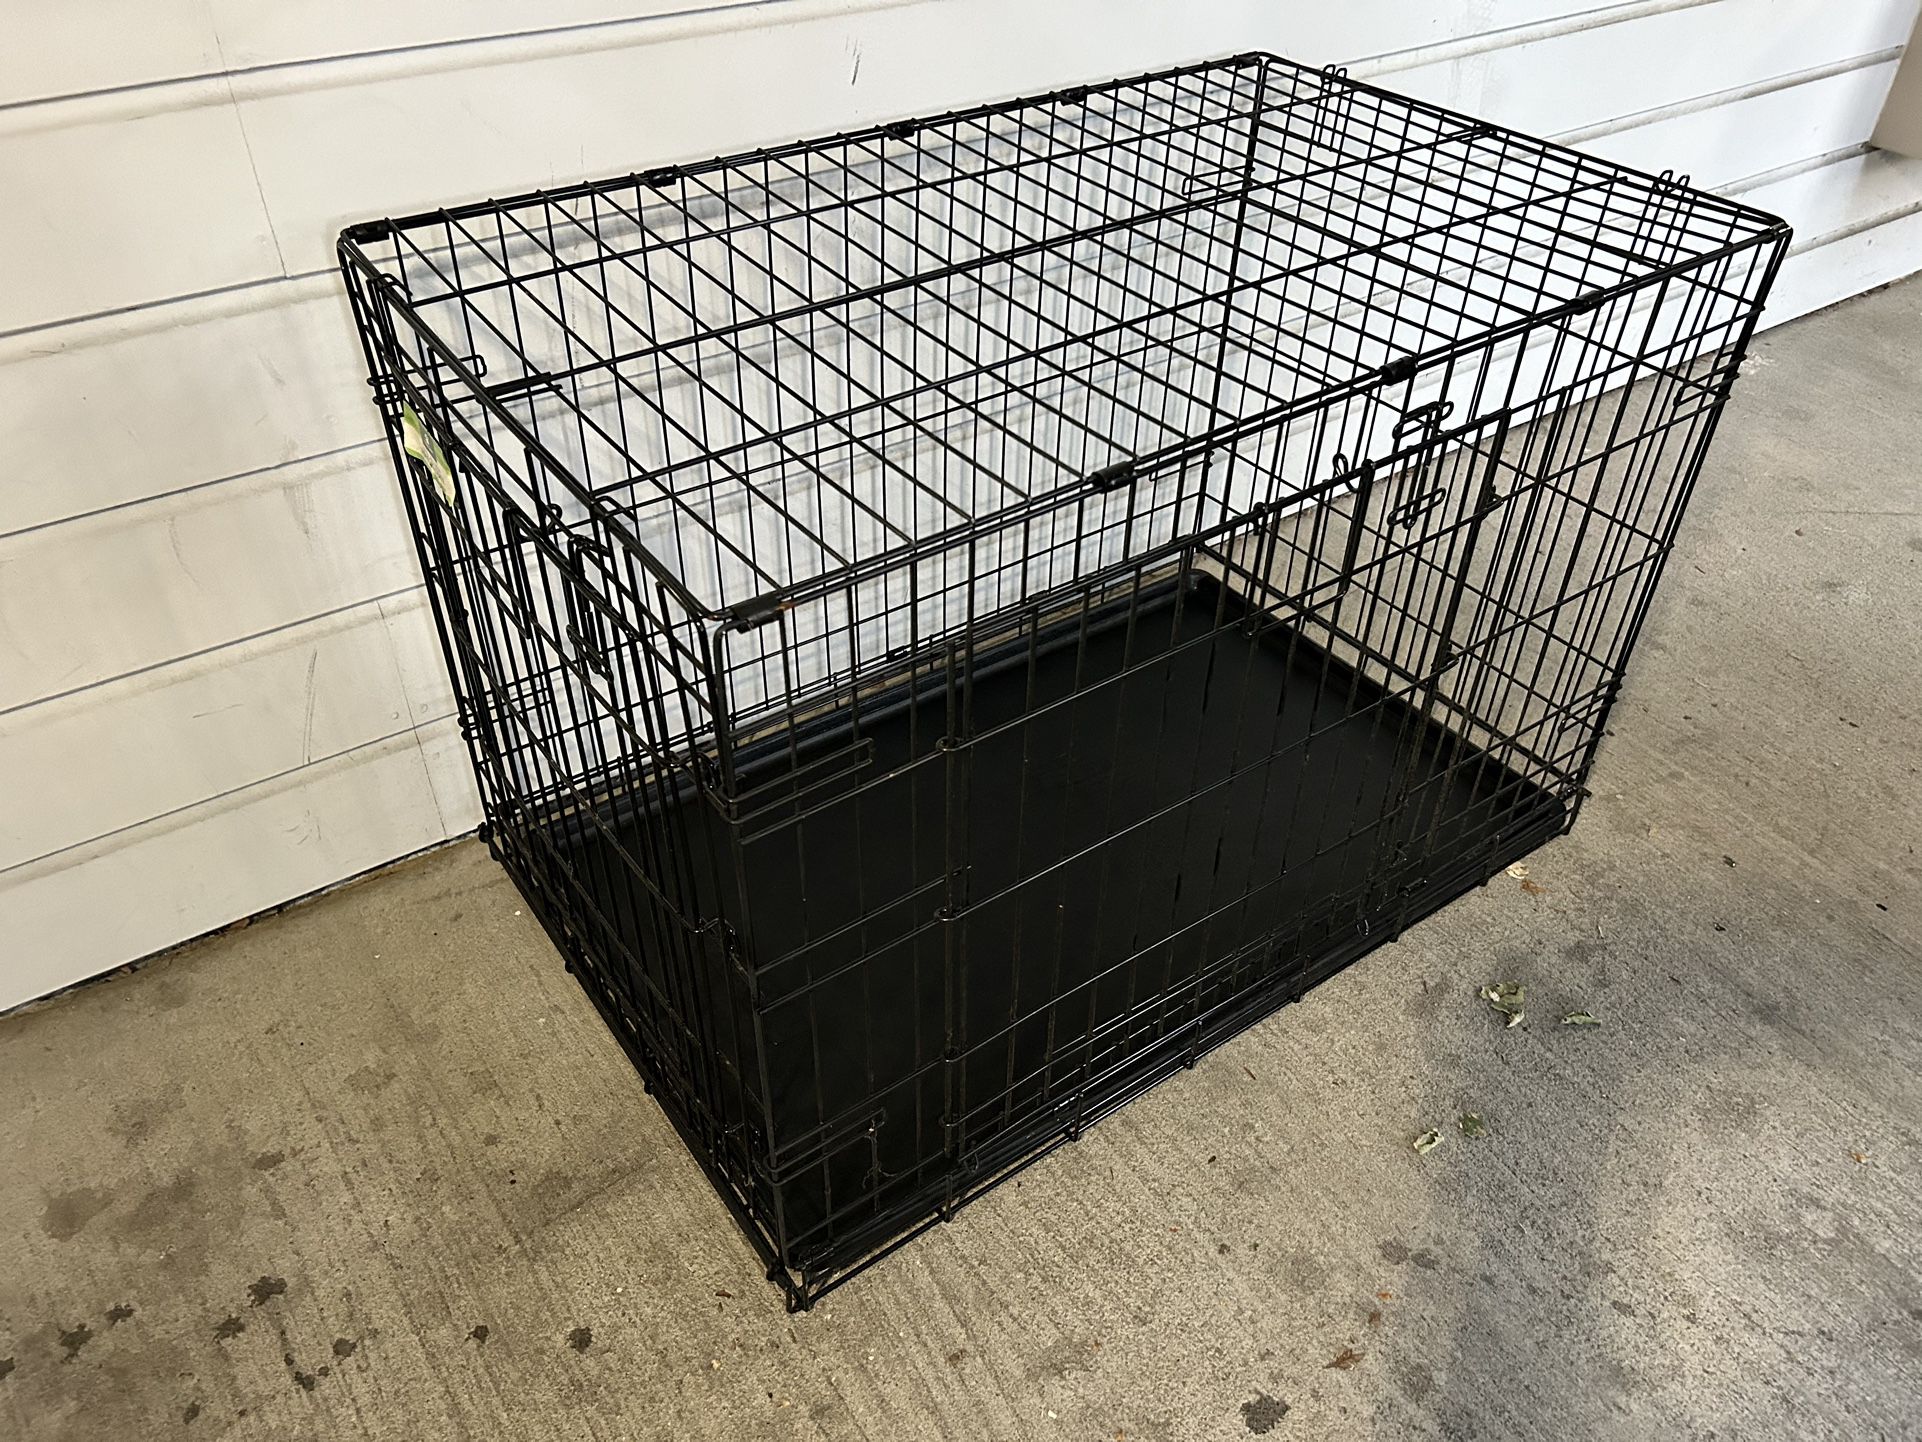 Top Paw 36” Double-Door Folding Dog Crate